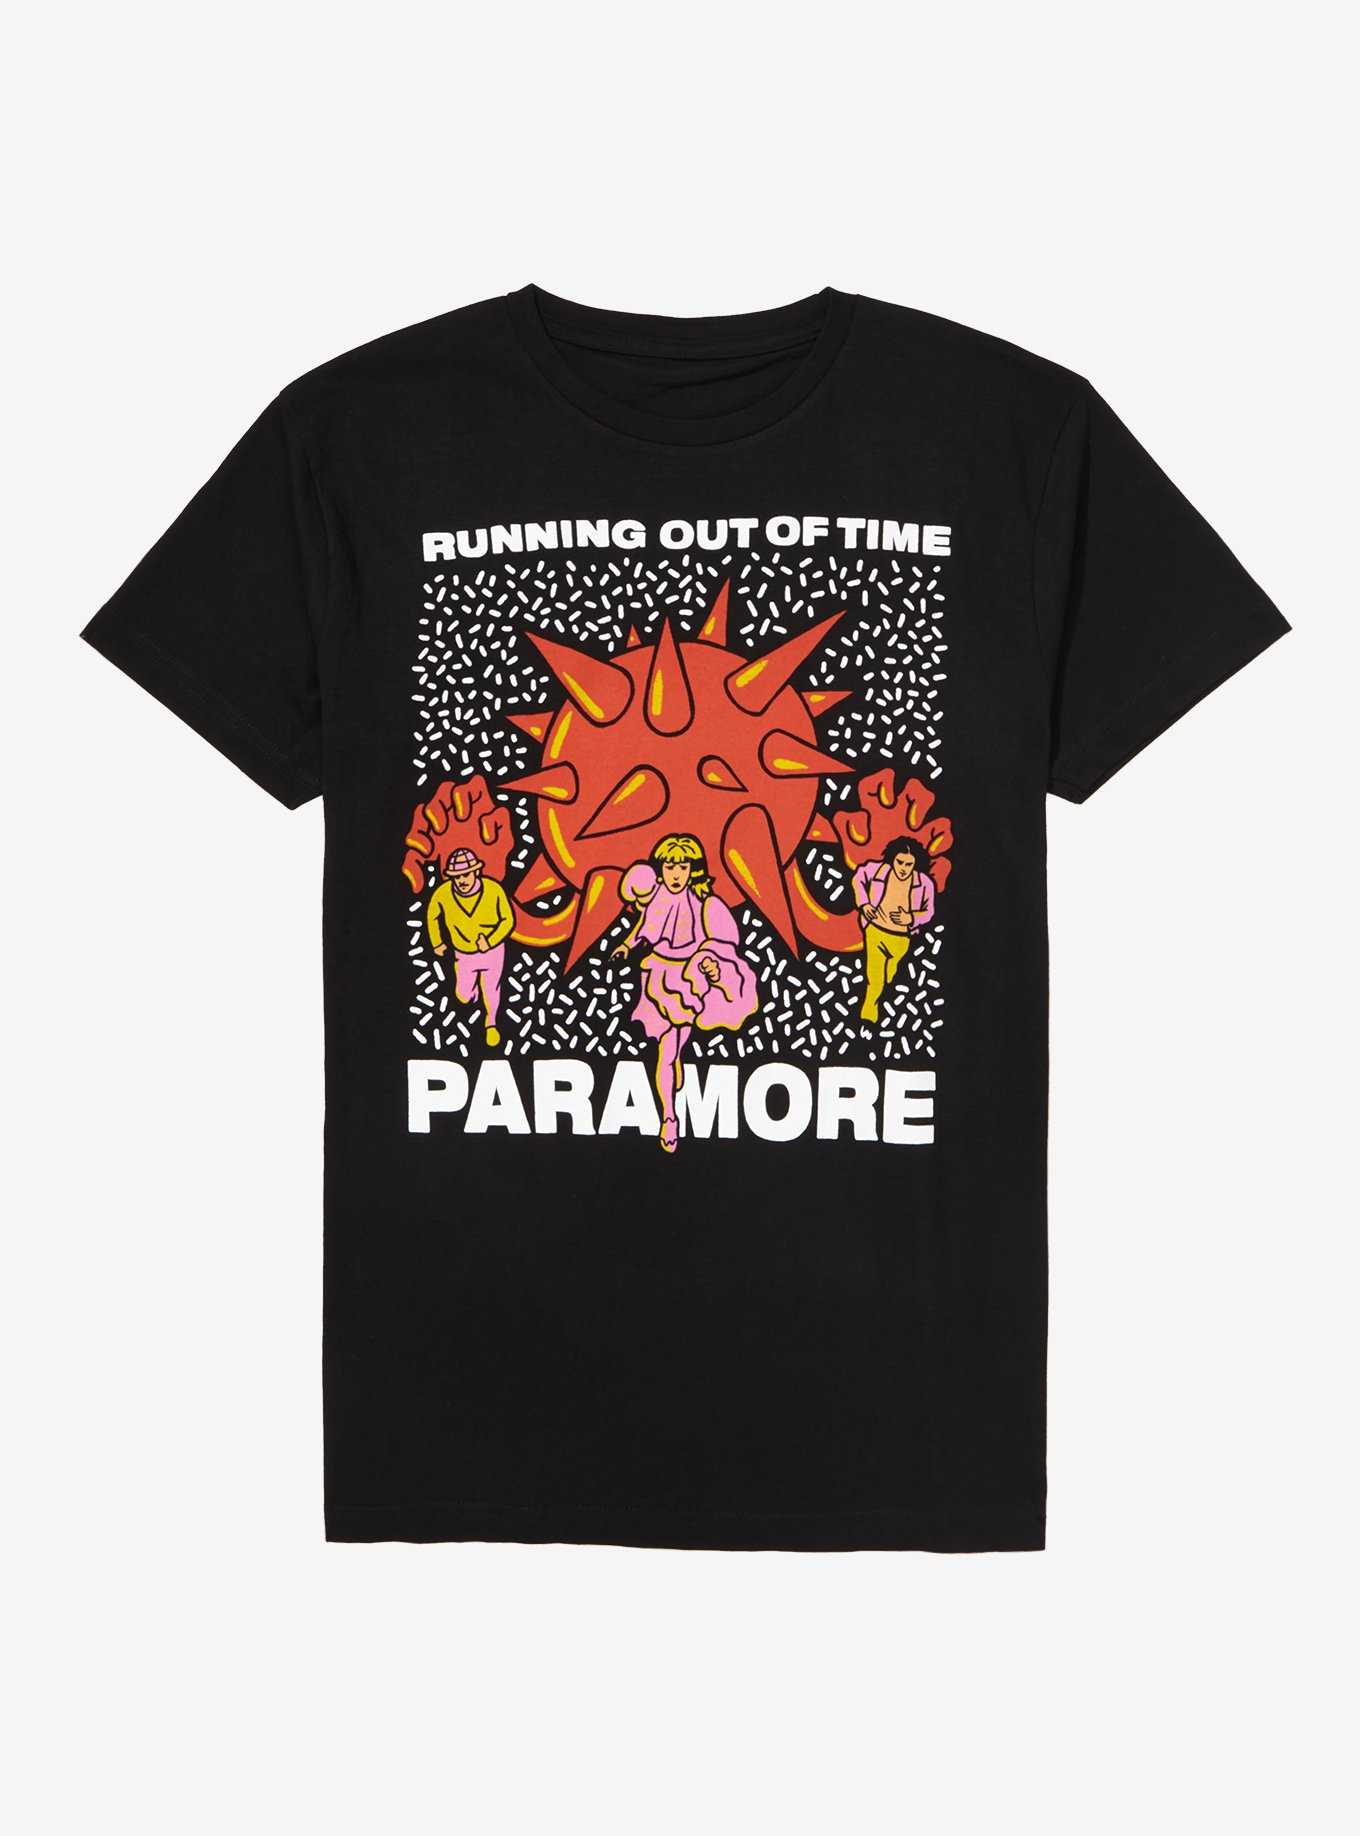 Paramore Doodle Art Shirt, Paramore Band Merch - Unleash Your